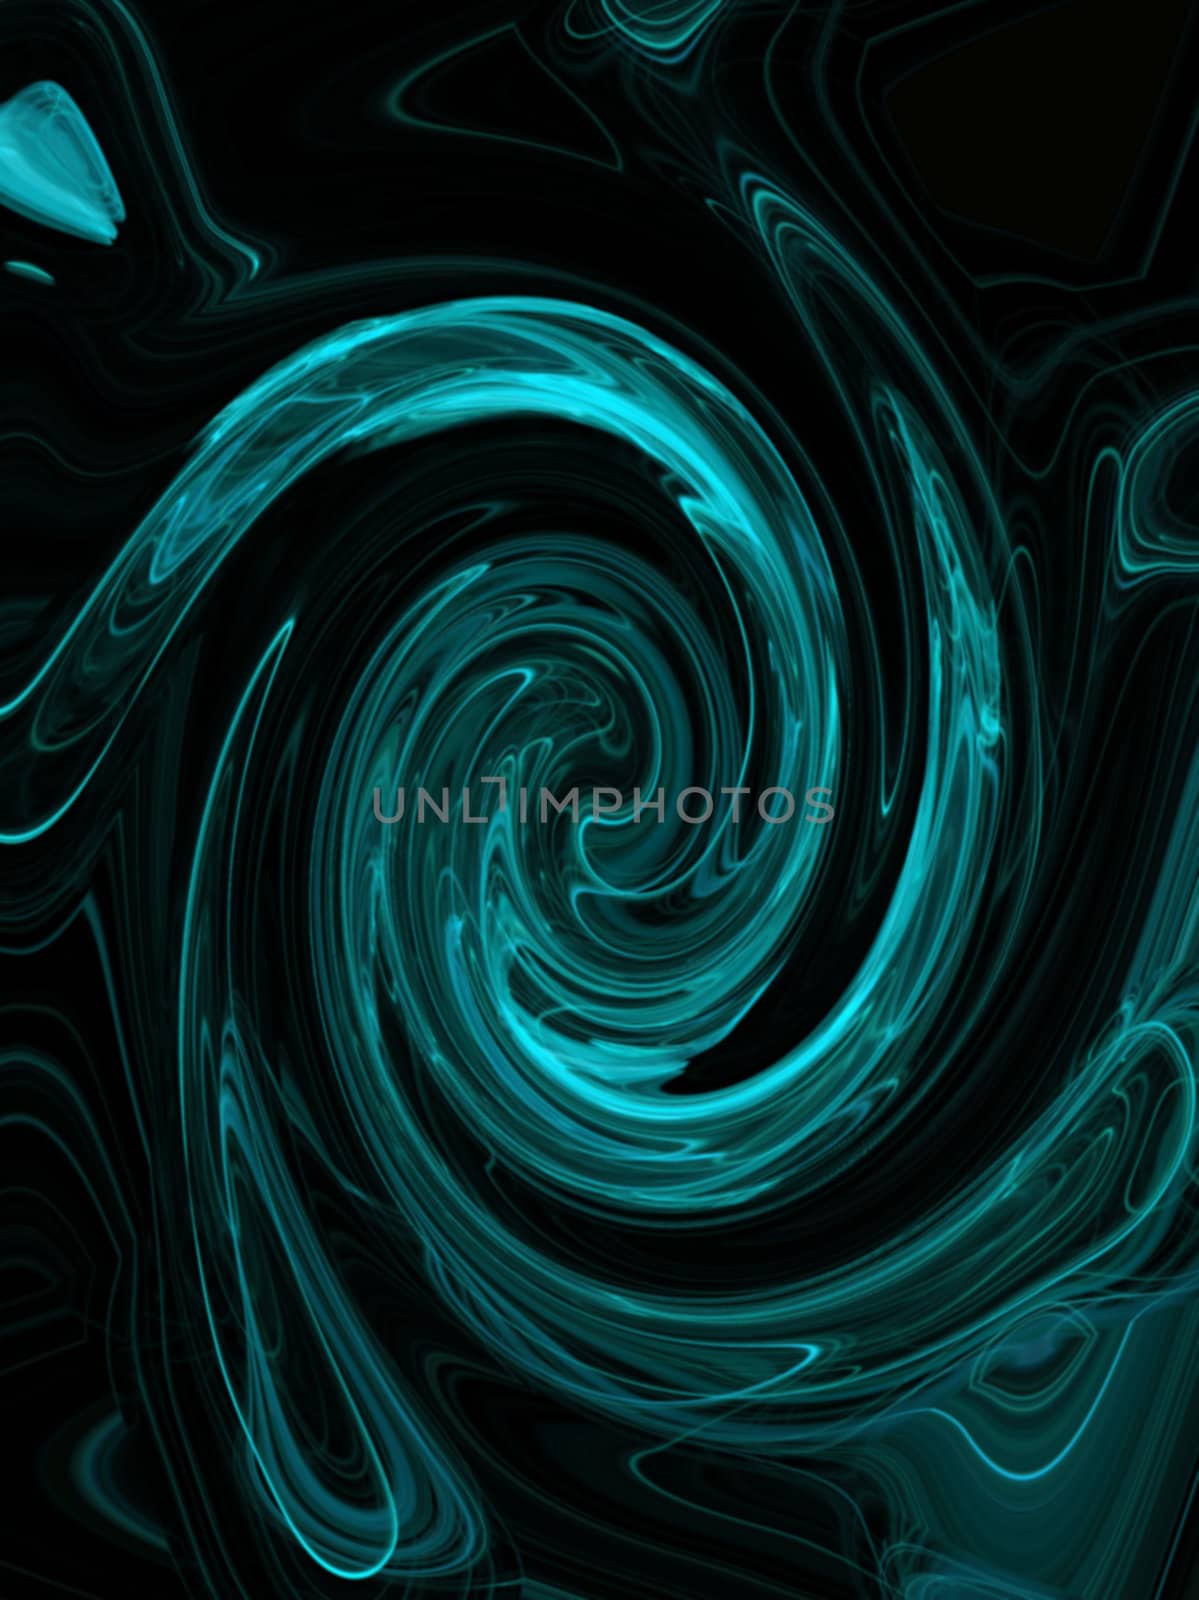 a blue spiral vortex - very fluid-like